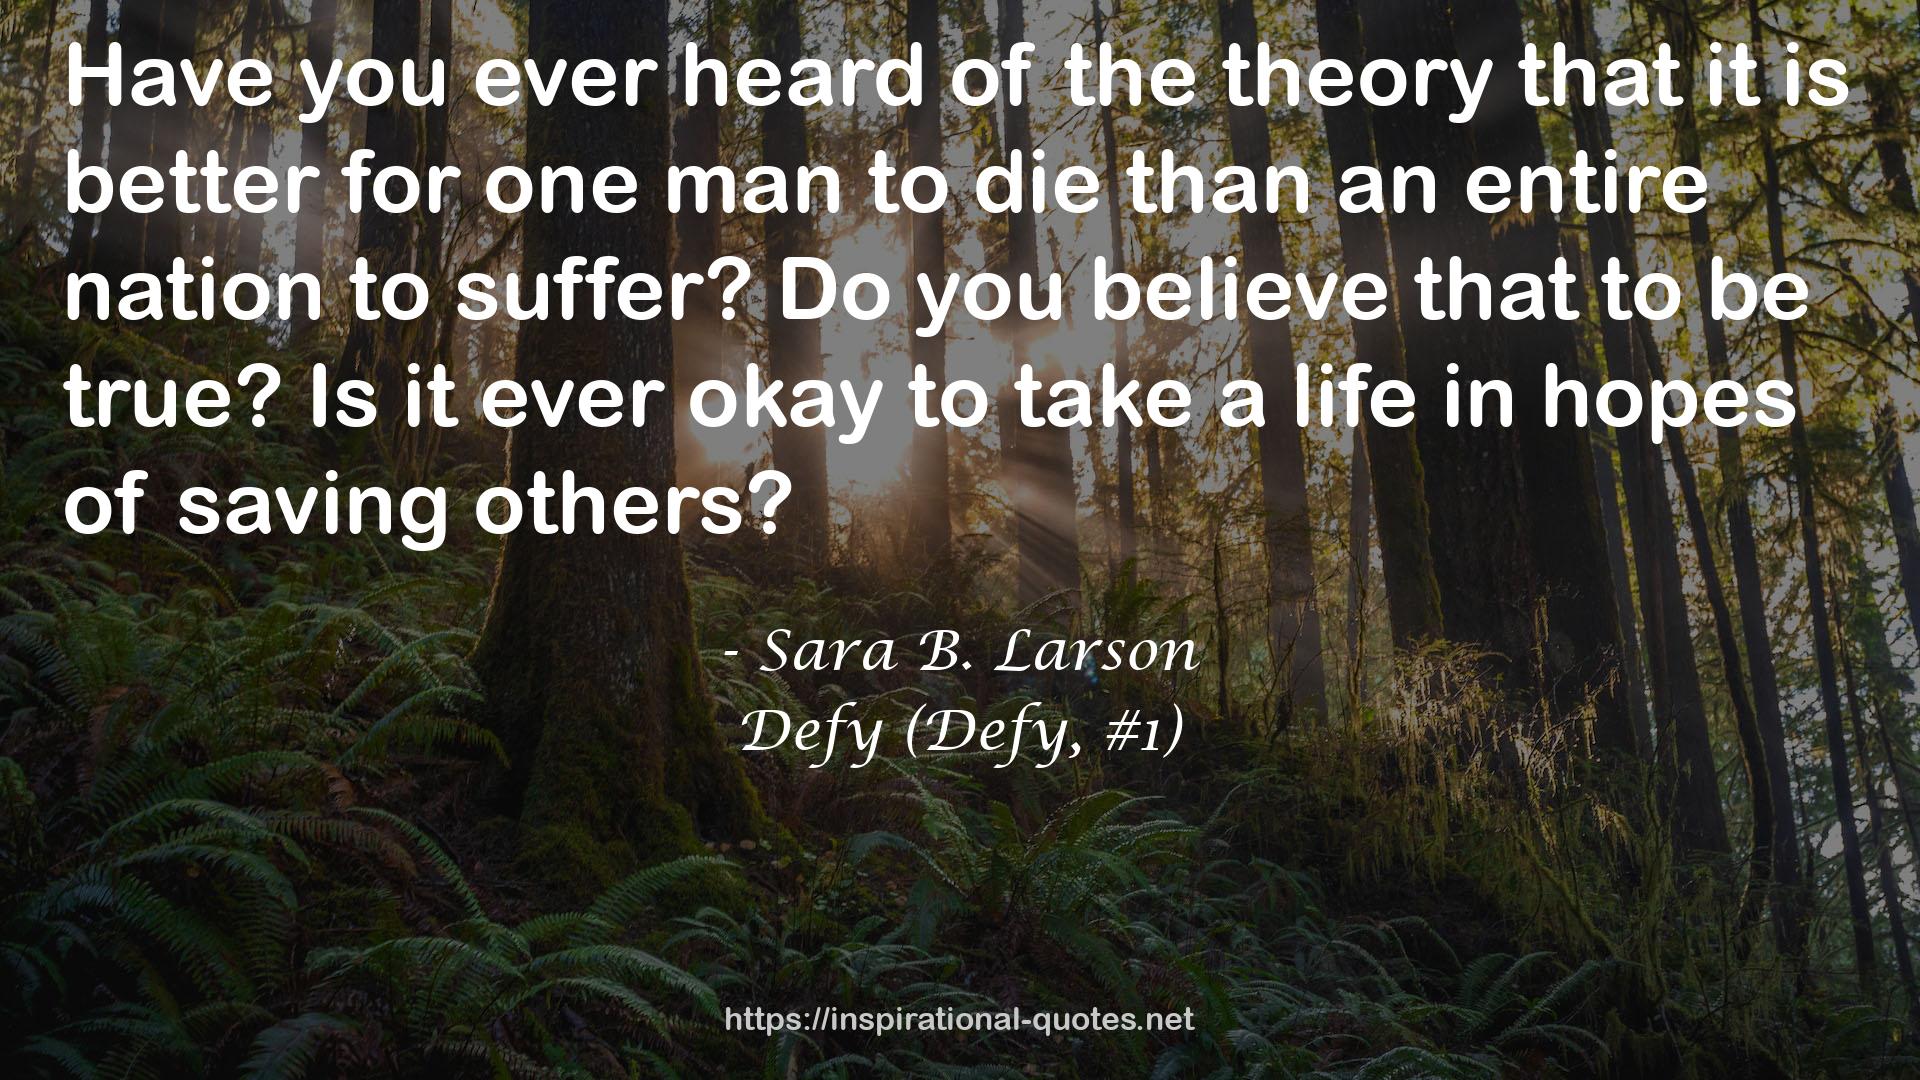 Sara B. Larson QUOTES